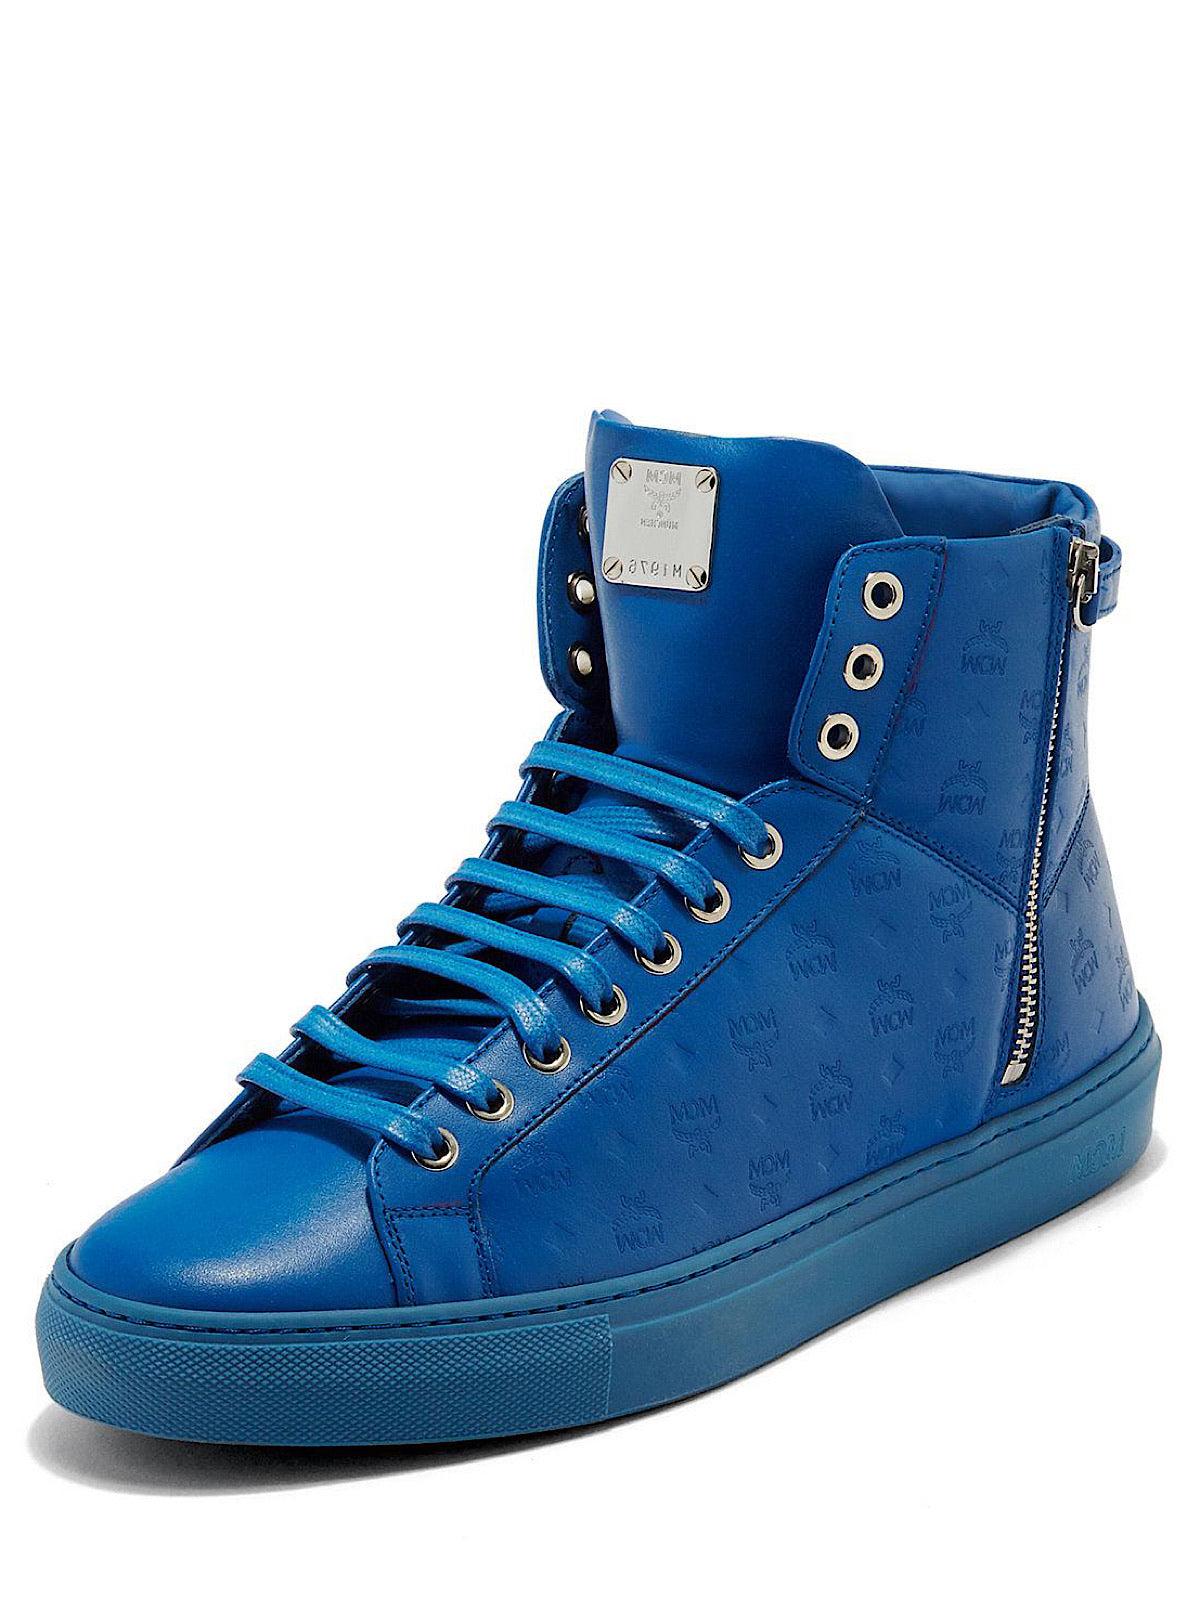 high top blue sneakers